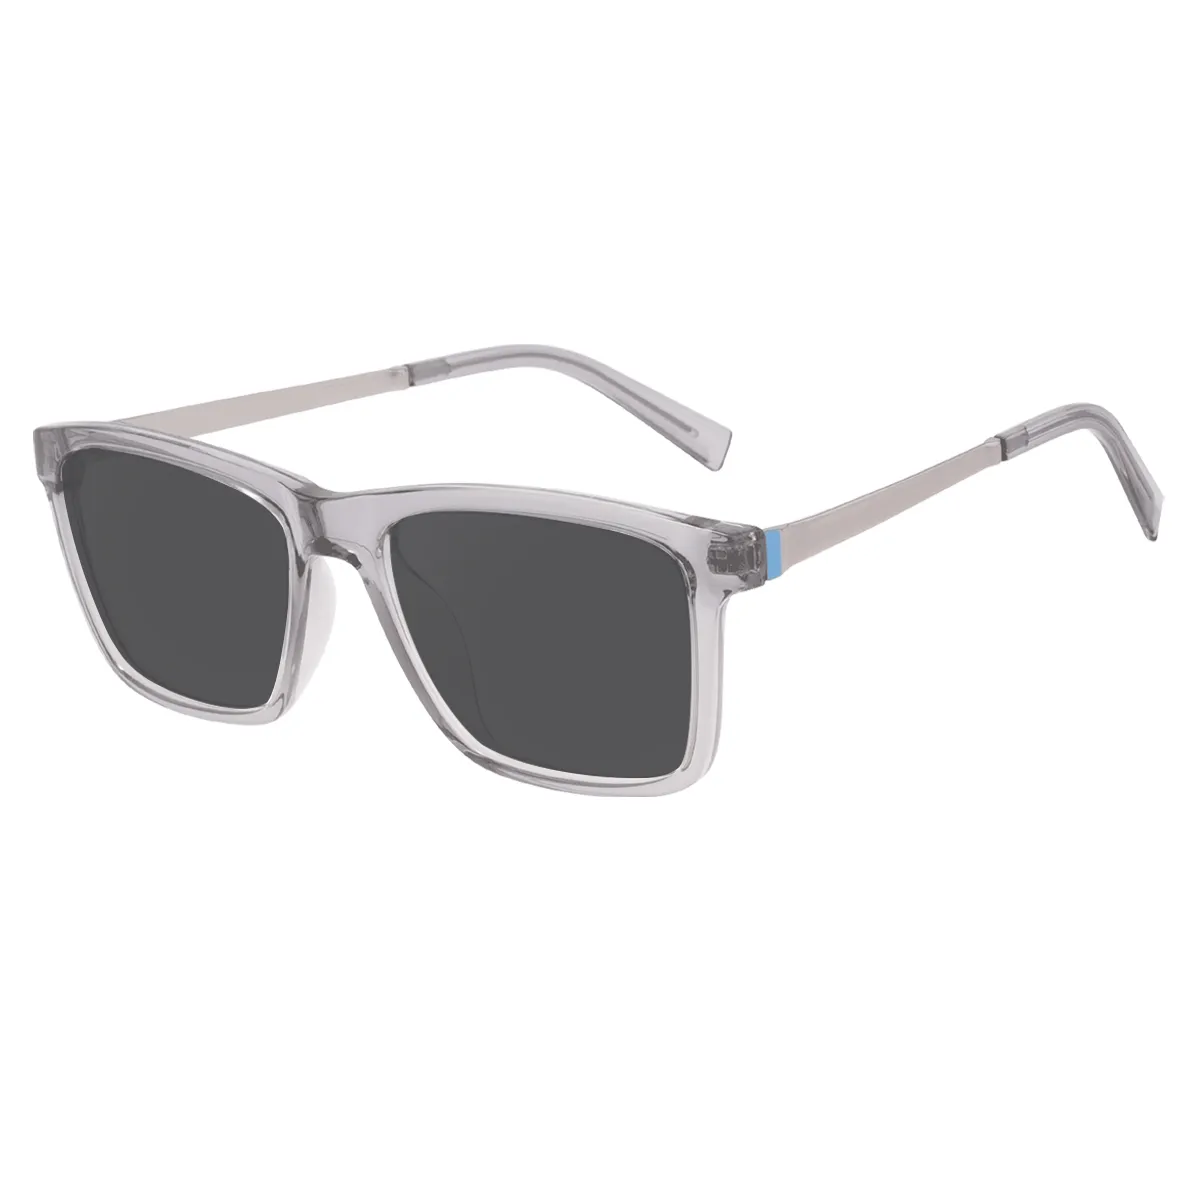 Merle - Square Transparent-Gray Sunglasses for Men & Women